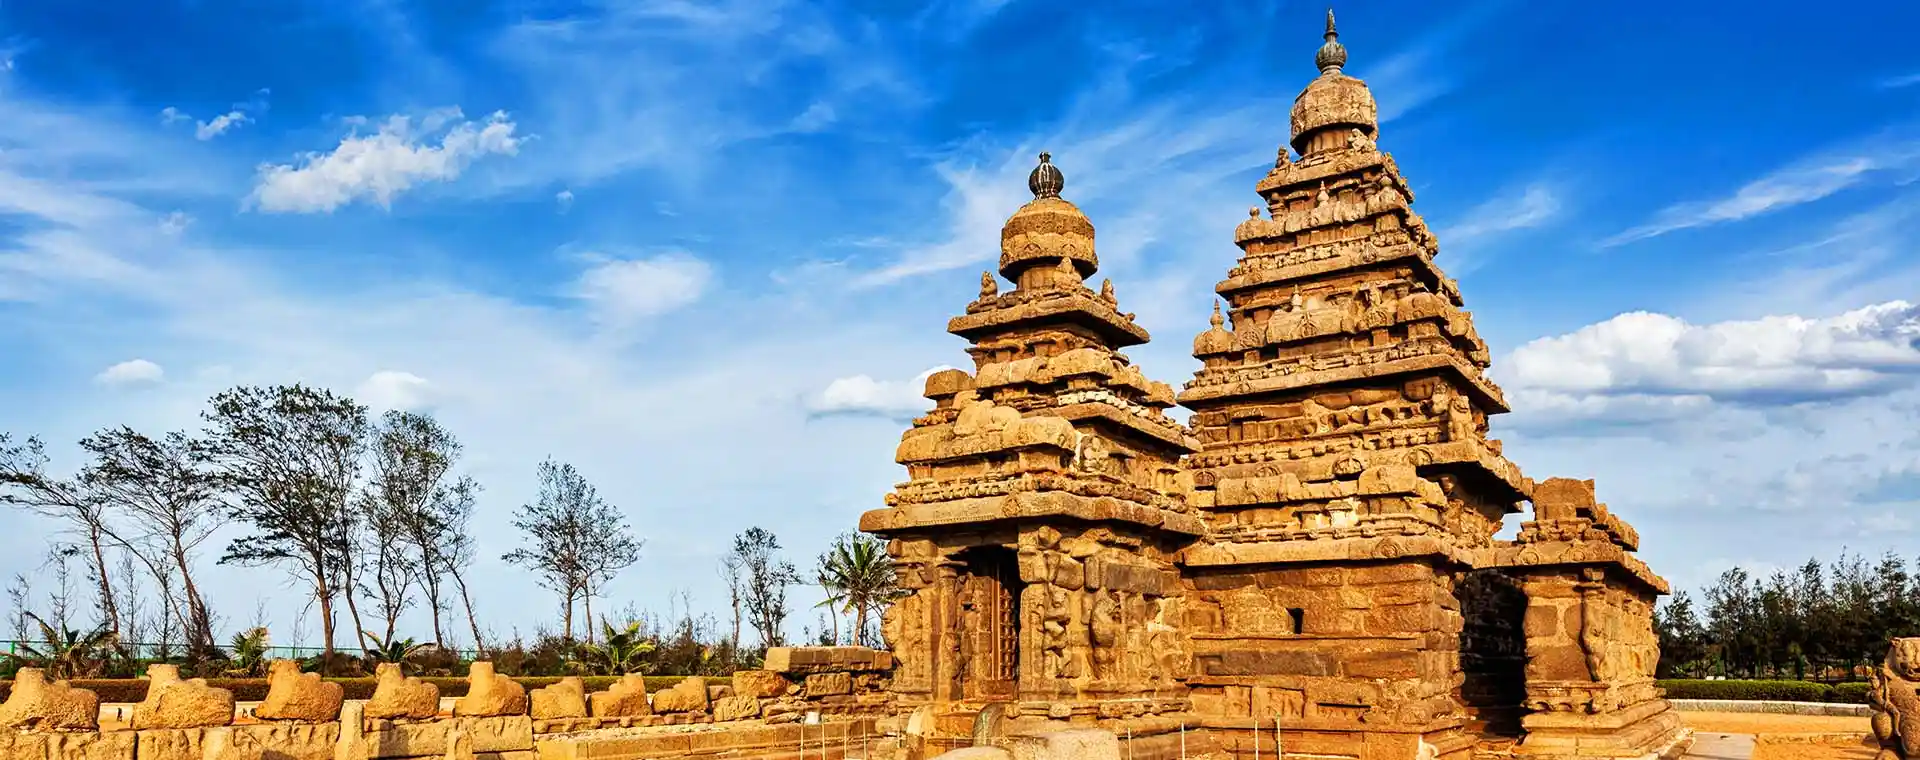 Top 15 Places to Visit in Mahabalipuram